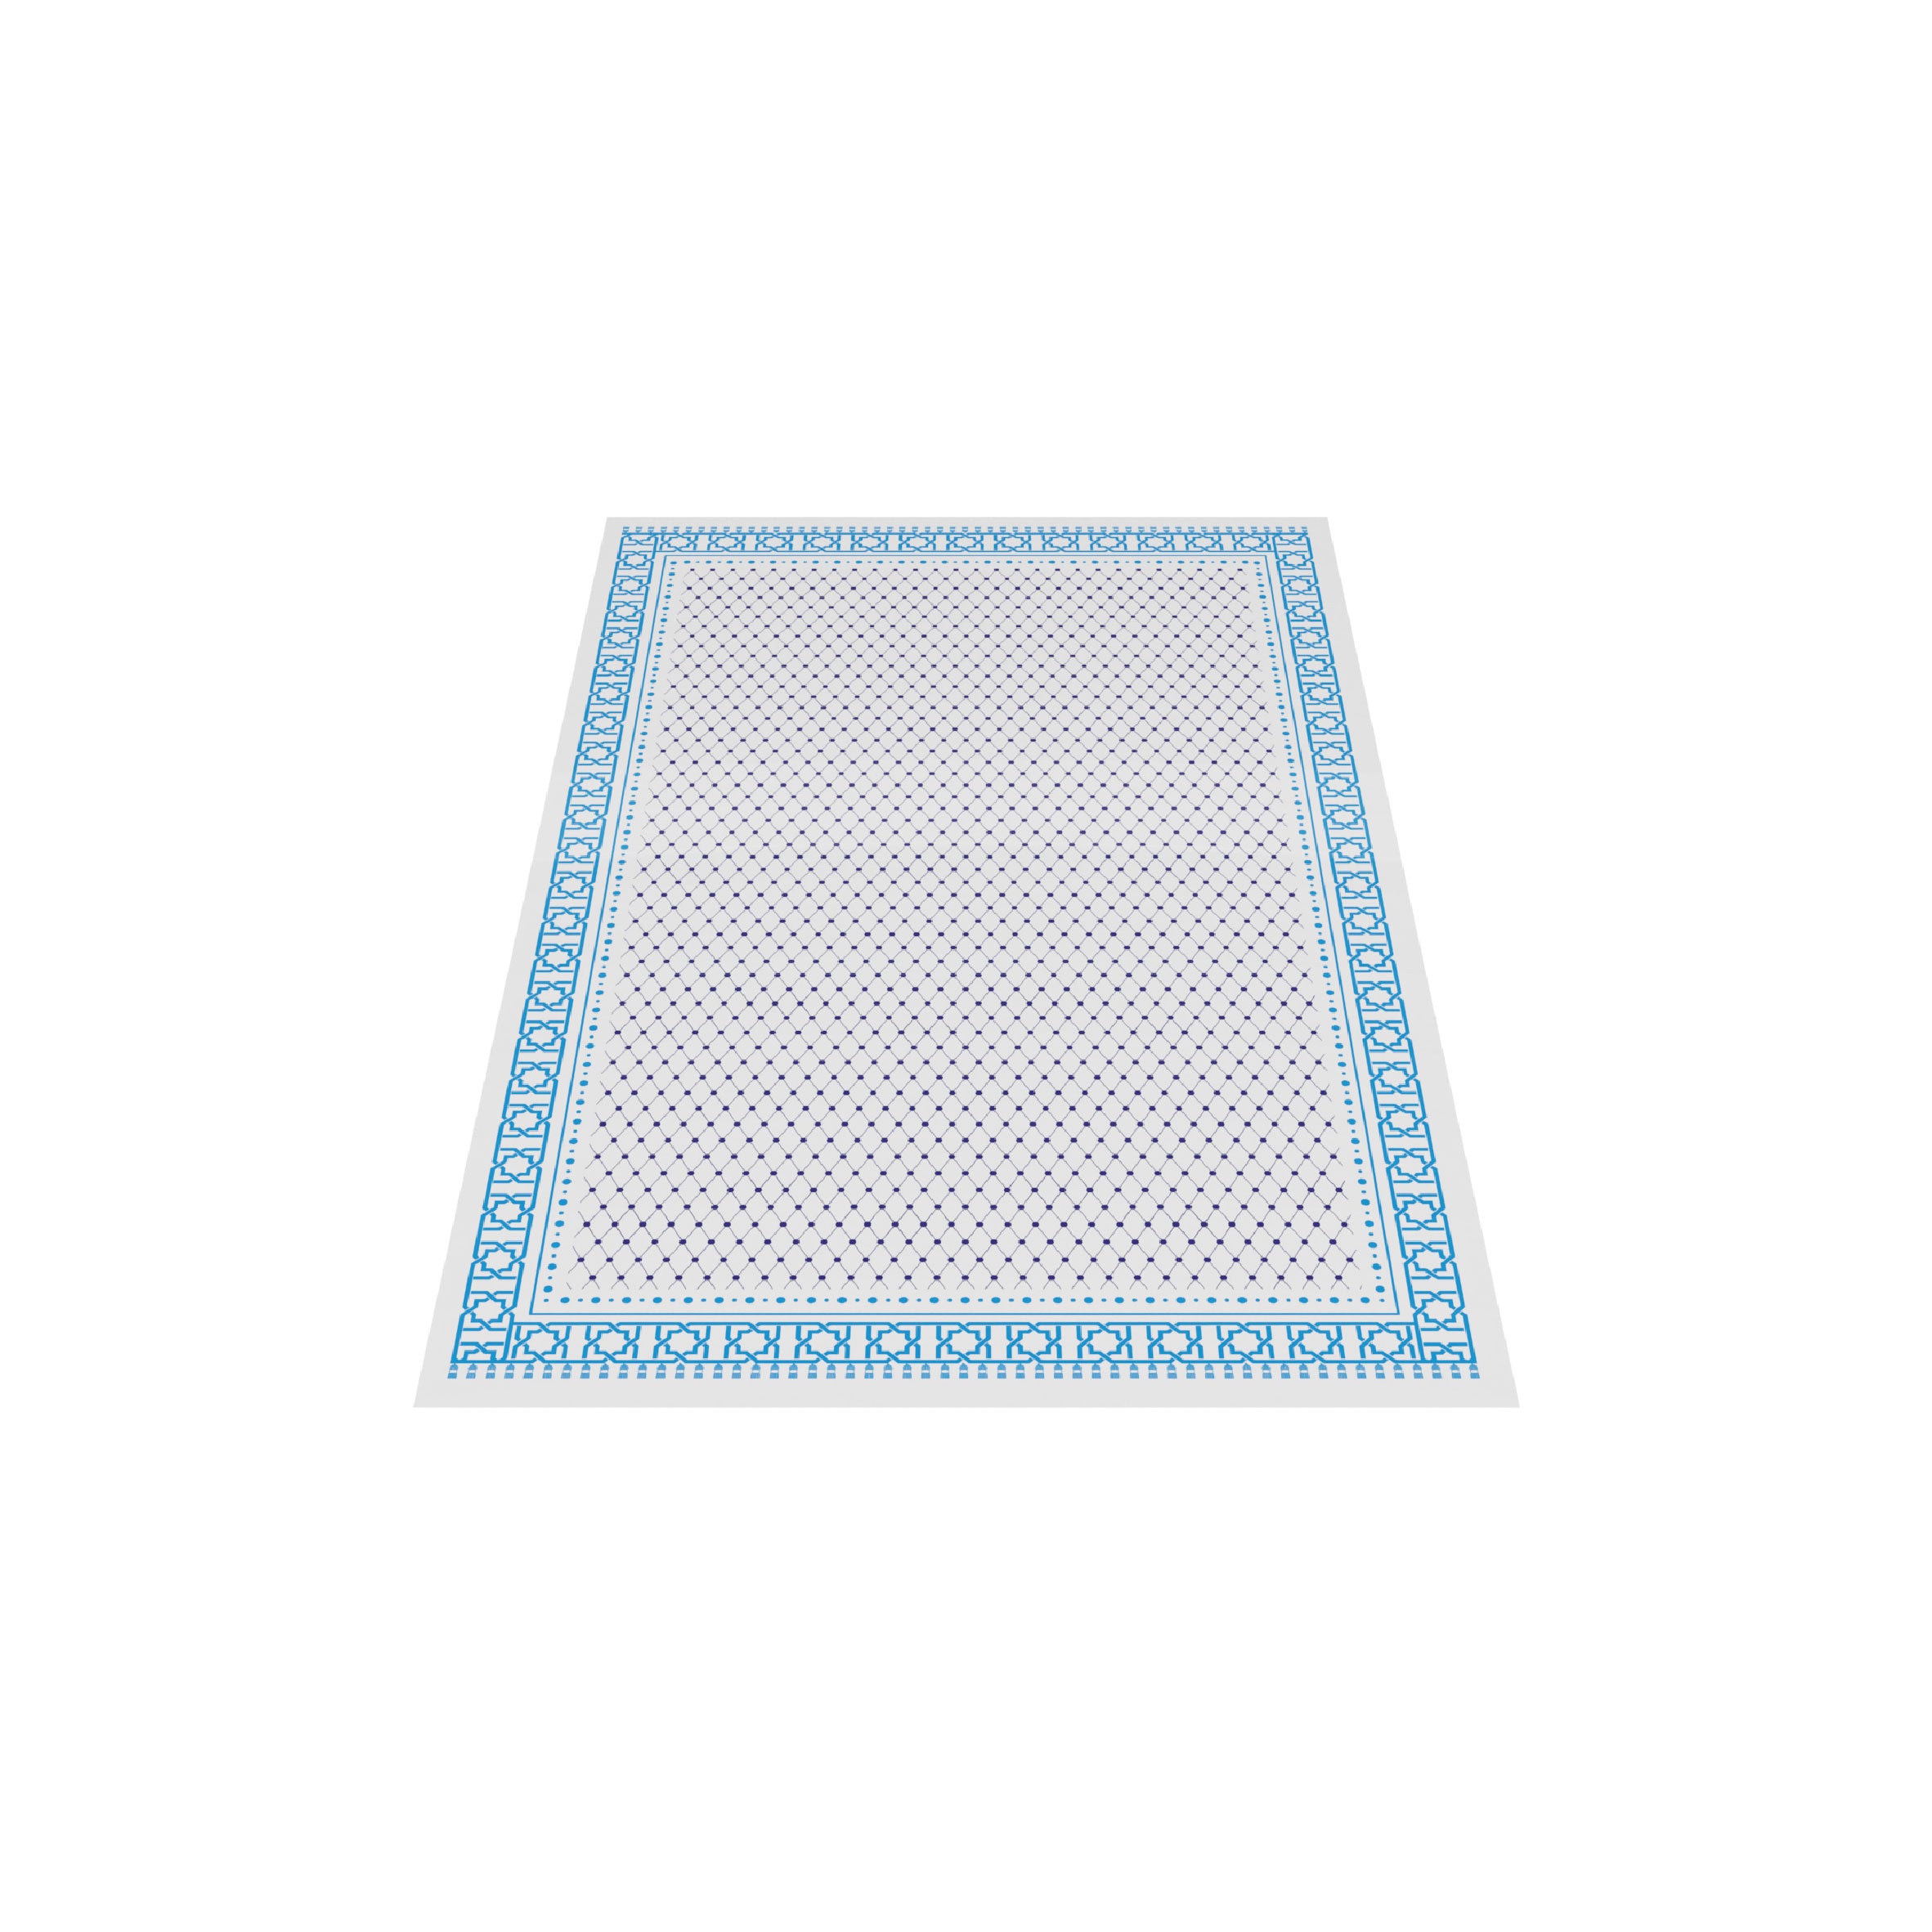 Disposable Prayer Mat Folded Sheets 60 x 115 cm - Hotpack Global